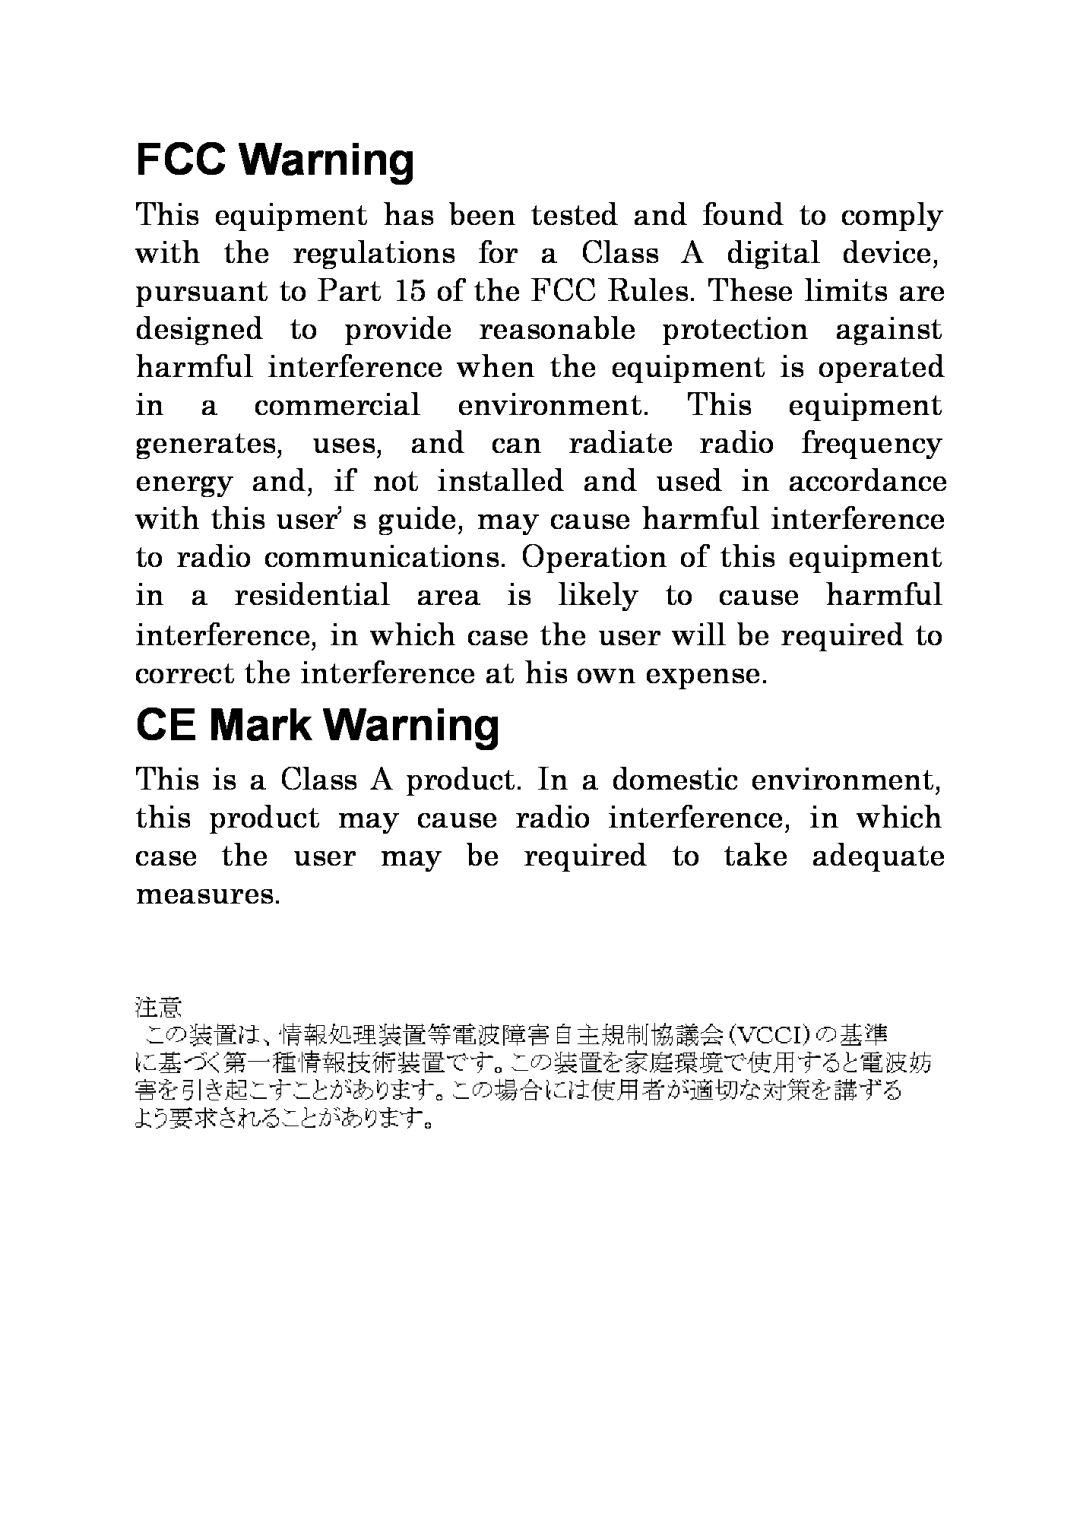 Palm ETHERNET HUB manual FCC Warning, CE Mark Warning 